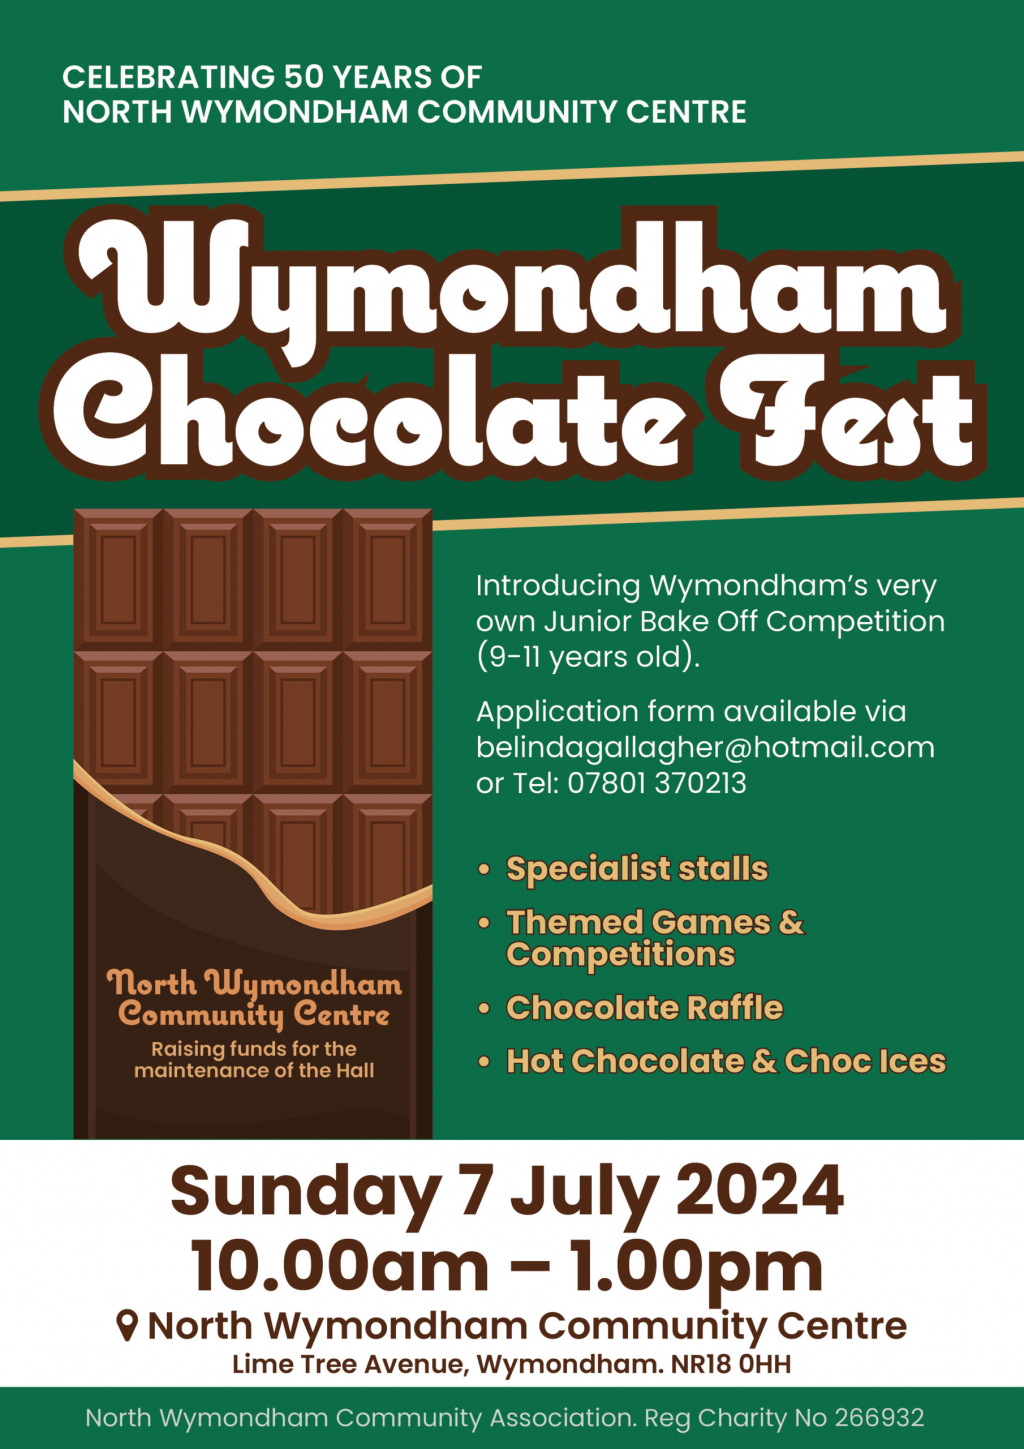 Wymondham chocolate fest poster with brown chocolate bar